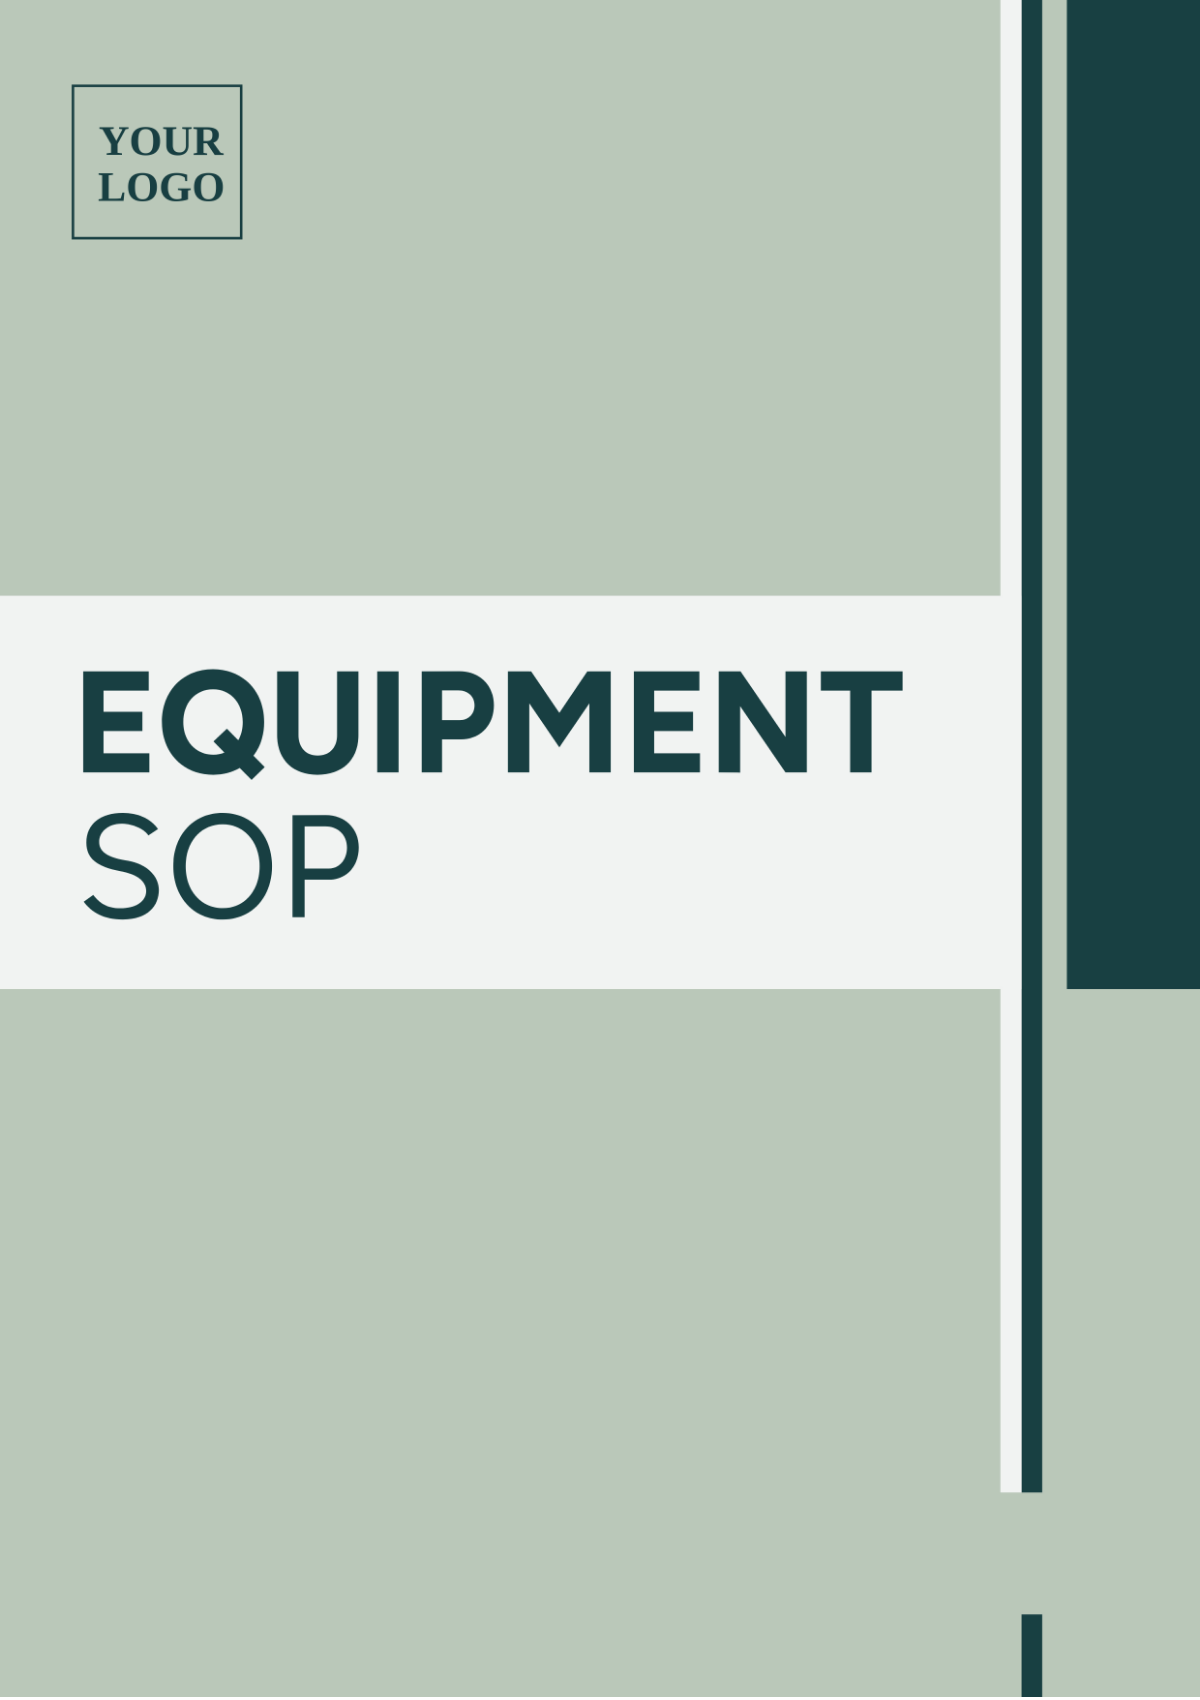 Equipment SOP Template